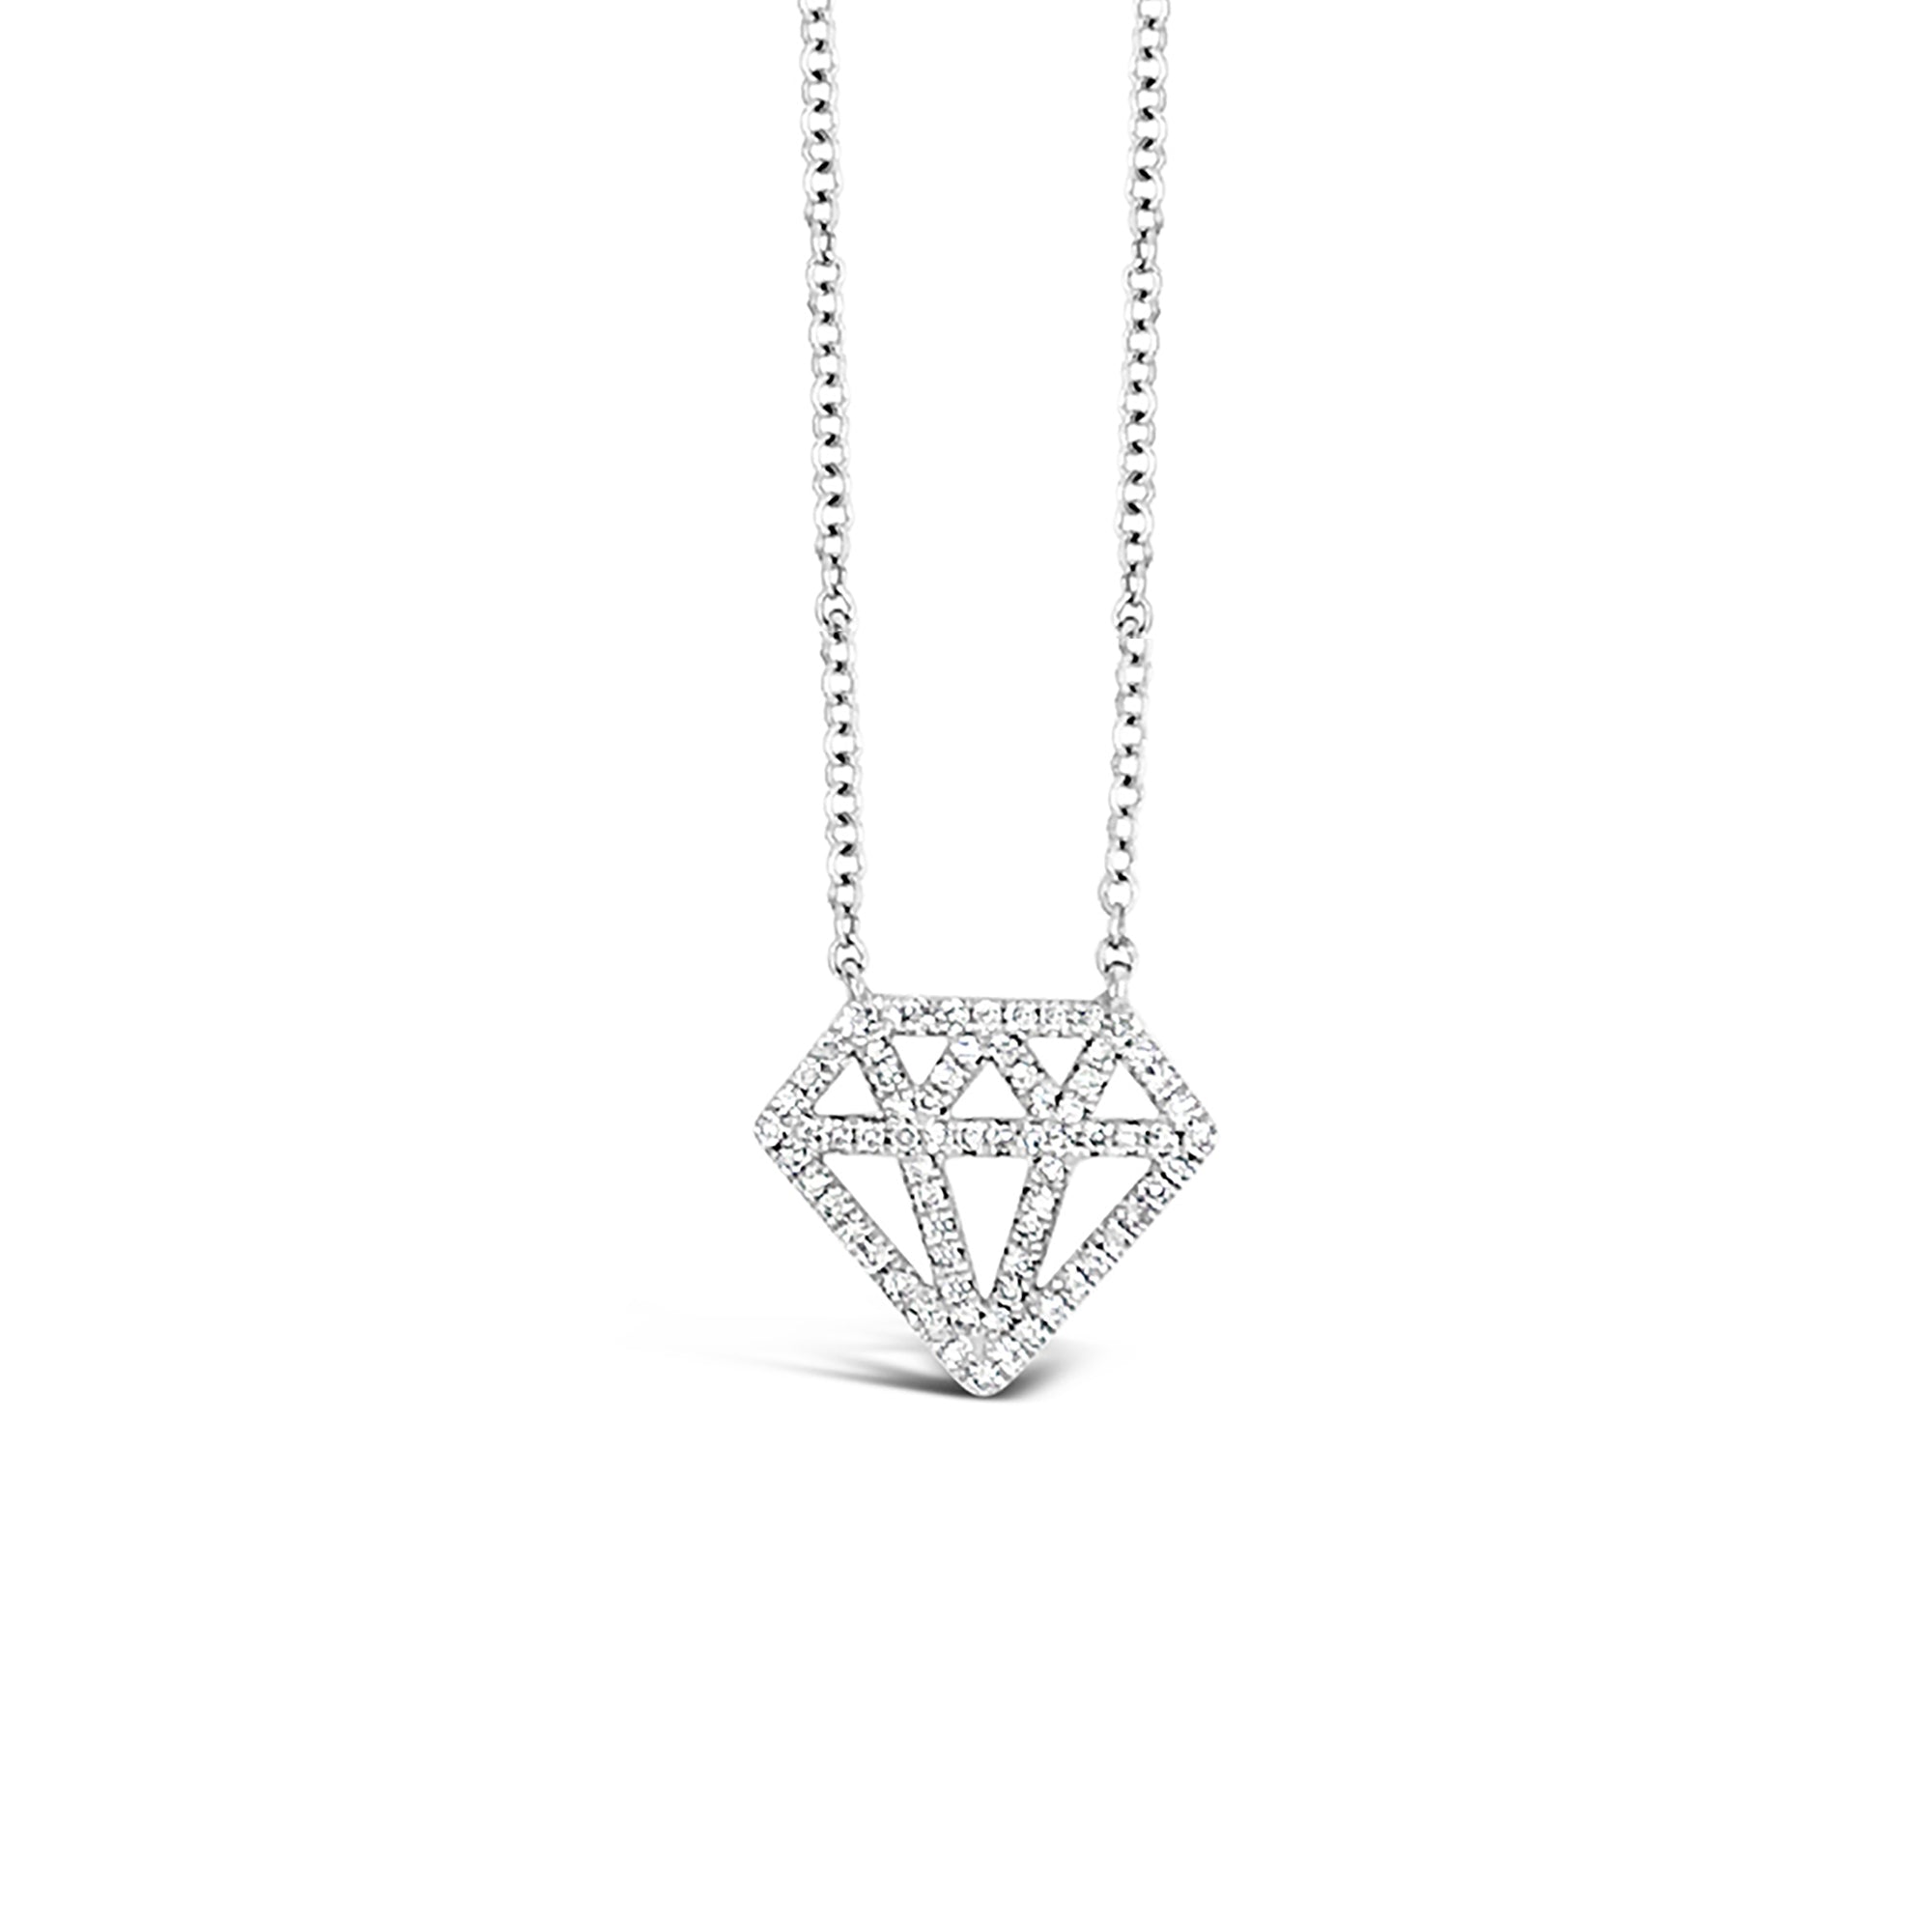 Diamond Cutout Pendant Necklace  -14K gold weighing 2.10 grams  -72 round pave-set diamonds totaling 0.16 carats